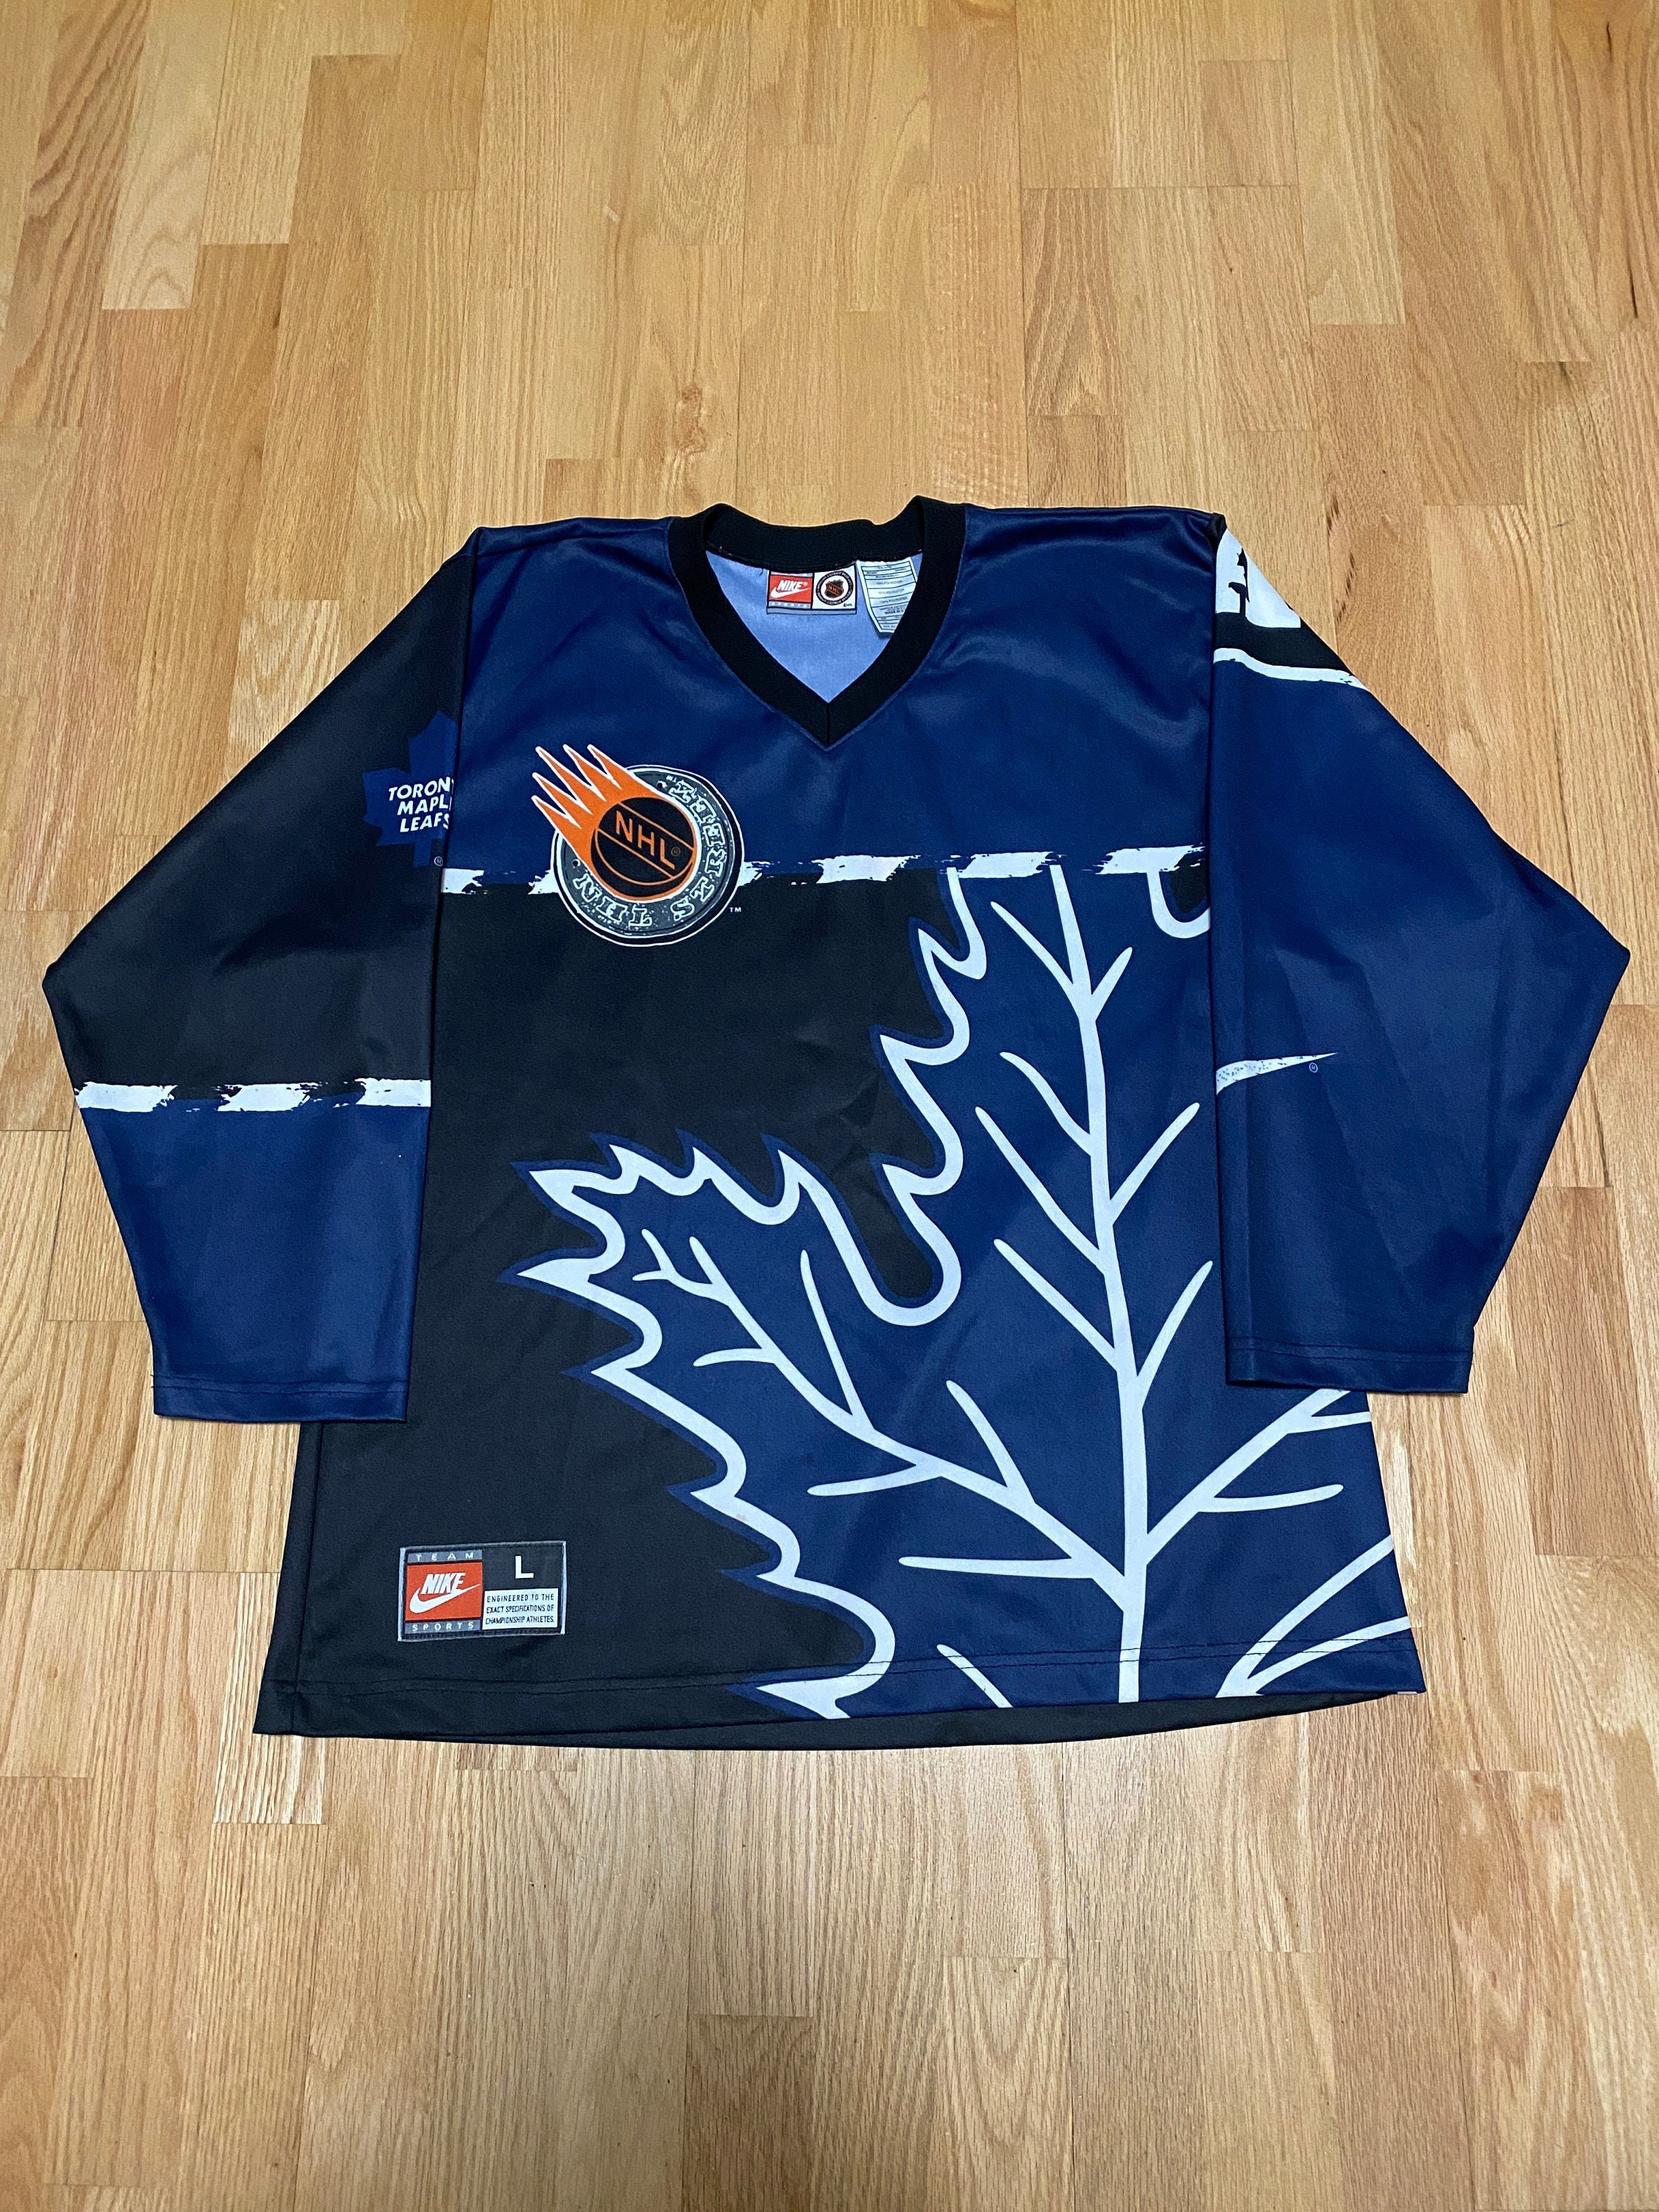 Toronto Maple Leafs Custom Jerseys, Toronto Maple Leafs Jerseys, Maple  Leafs Jersey, Hockey Sweaters